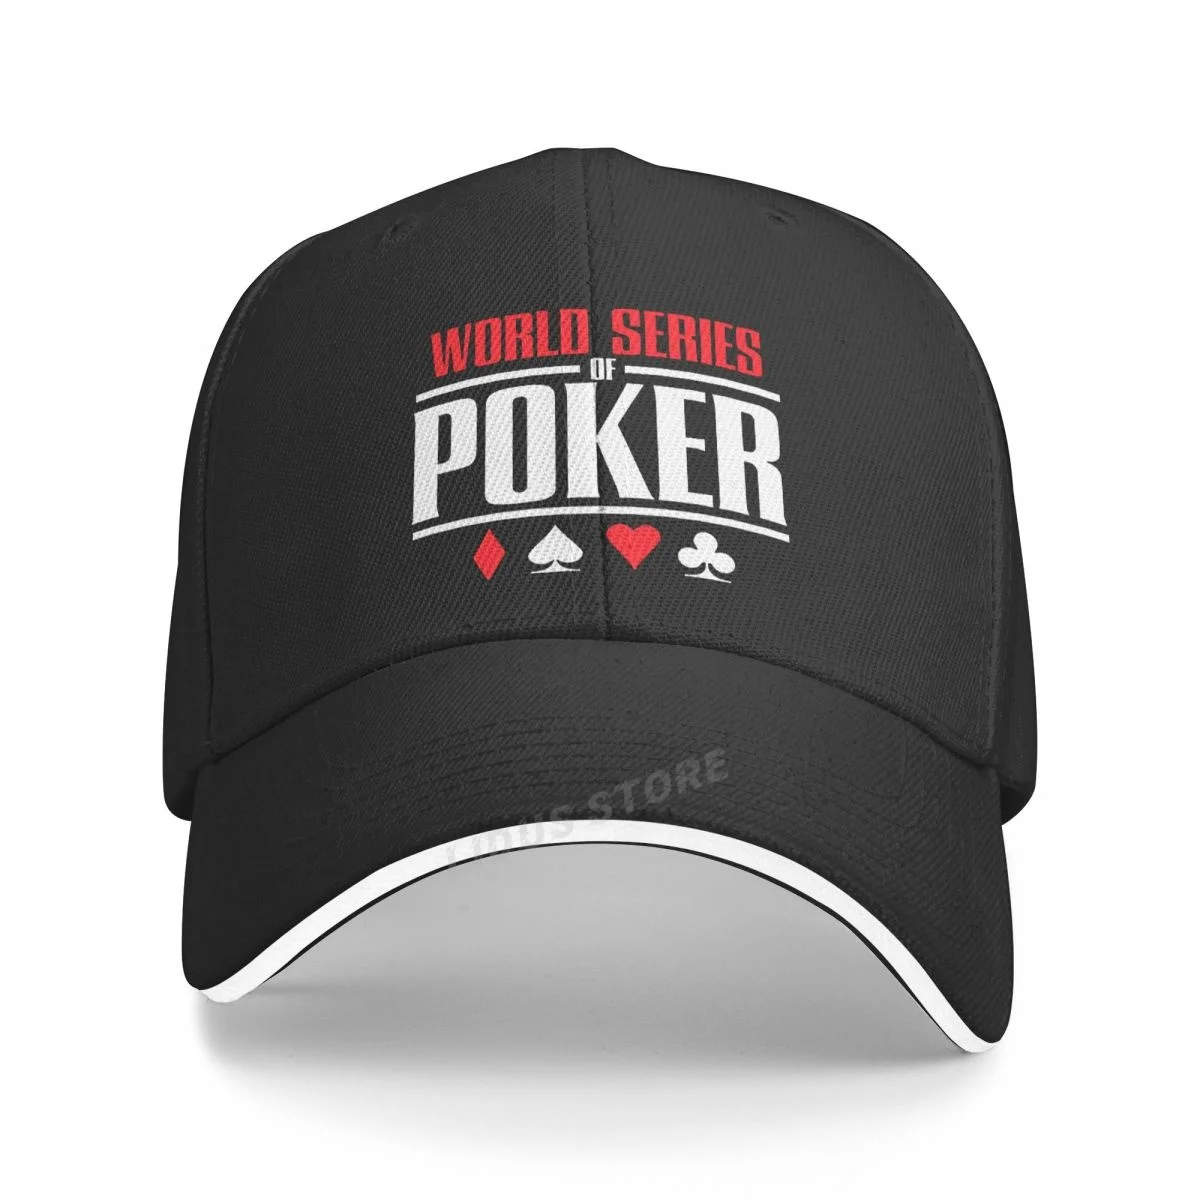 World Series Of Poker Baseball Caps Cool Adjustable Outdoor Unisex Hats Women Men Peaked Cap